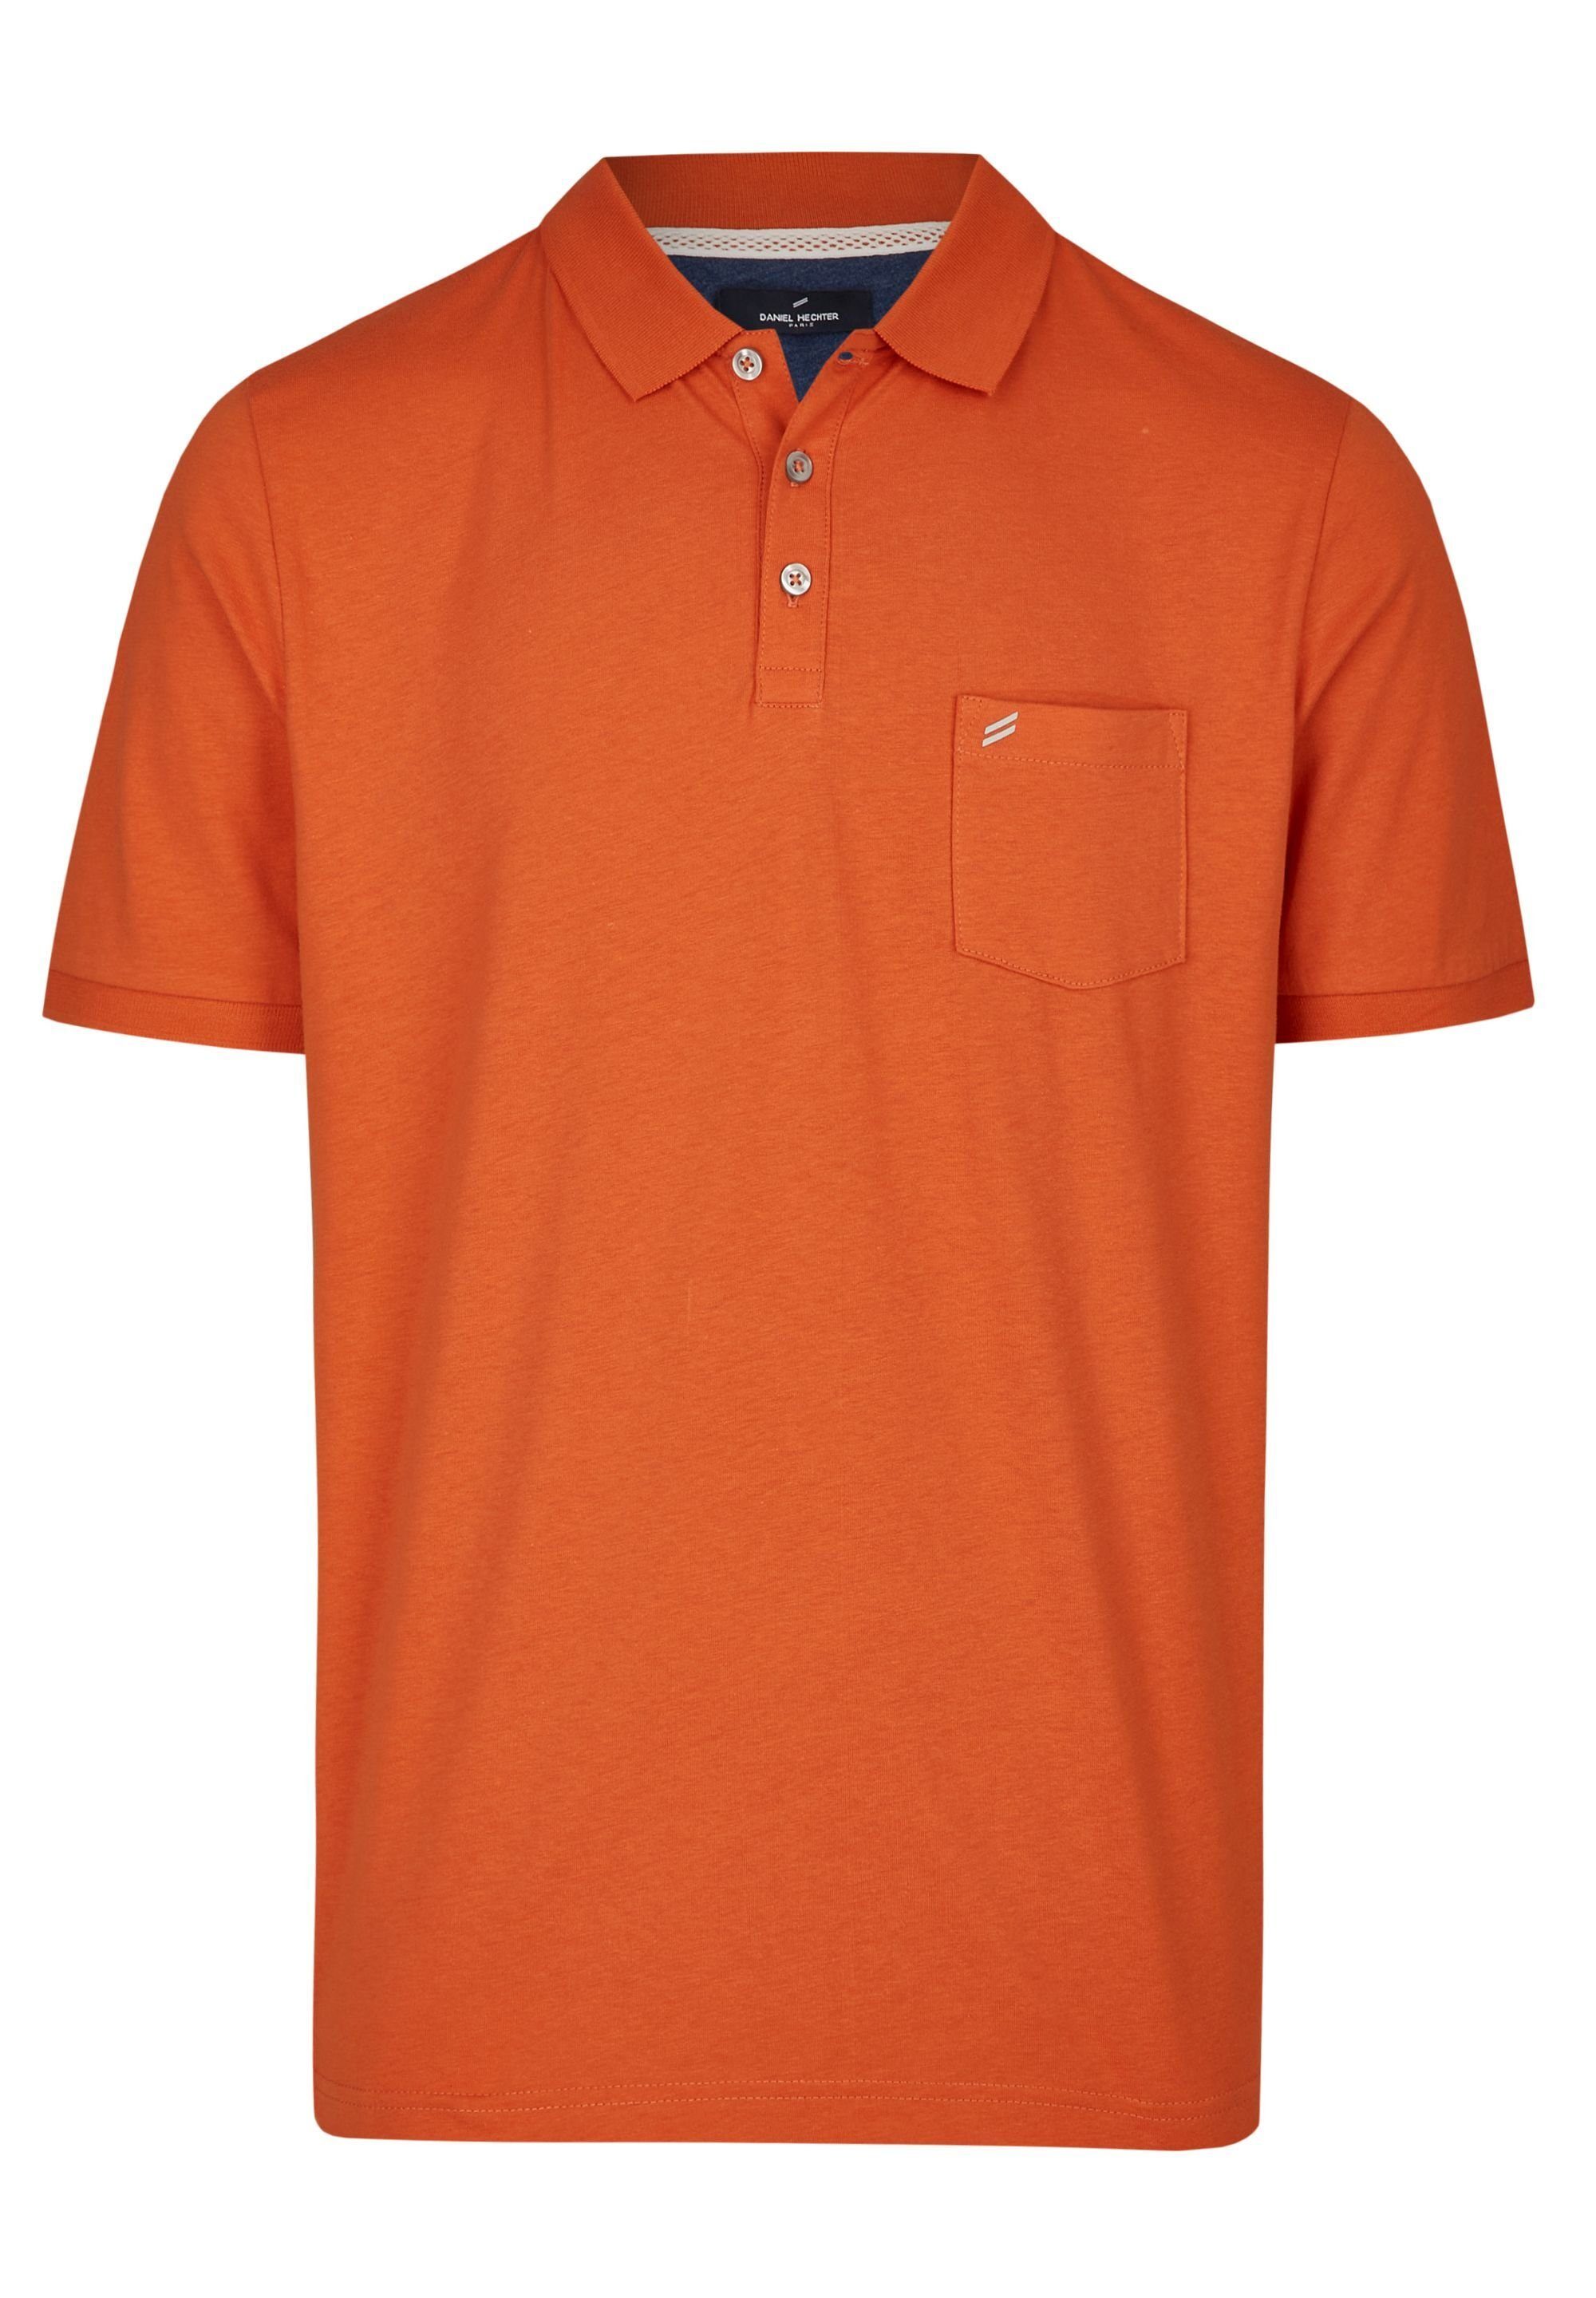 HECHTER PARIS Poloshirt im unifarbenem Design orange